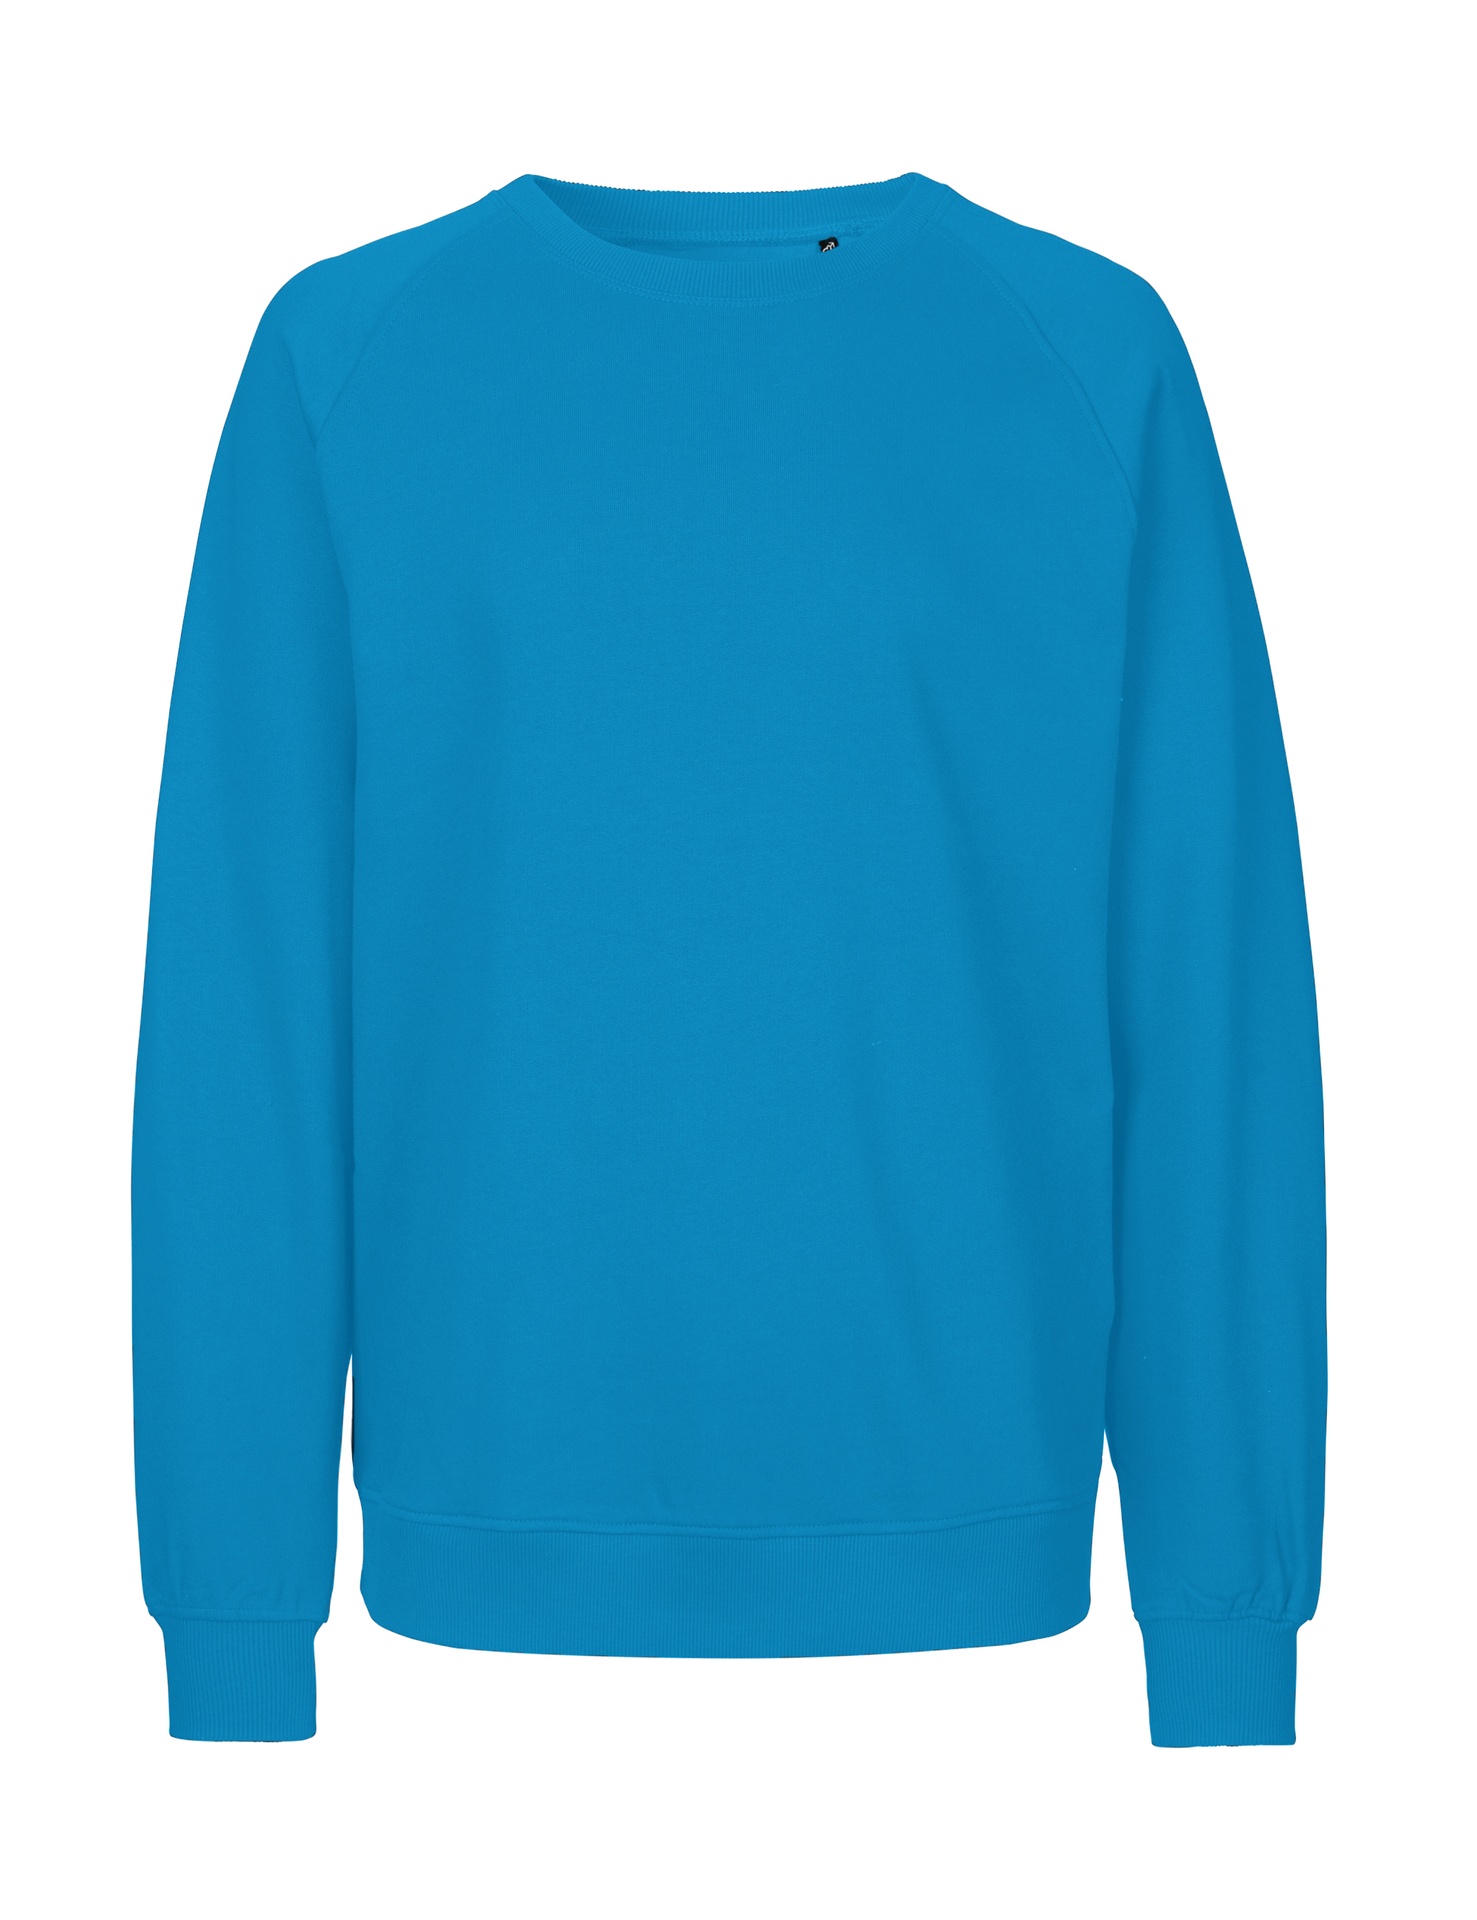 [PR/02771] Unisex Sweatshirt (Sapphire 27, M)